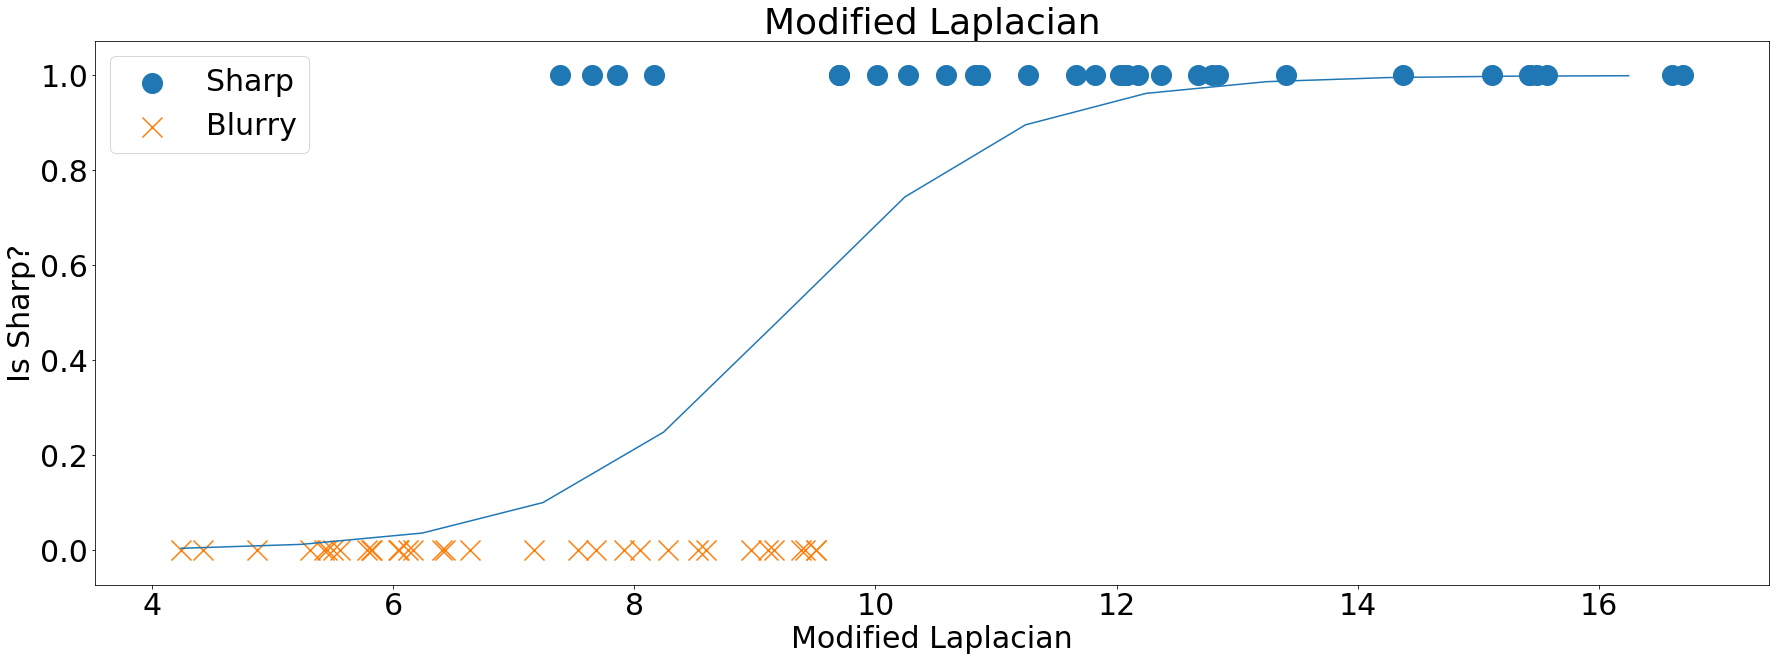 Modified Laplacian plot